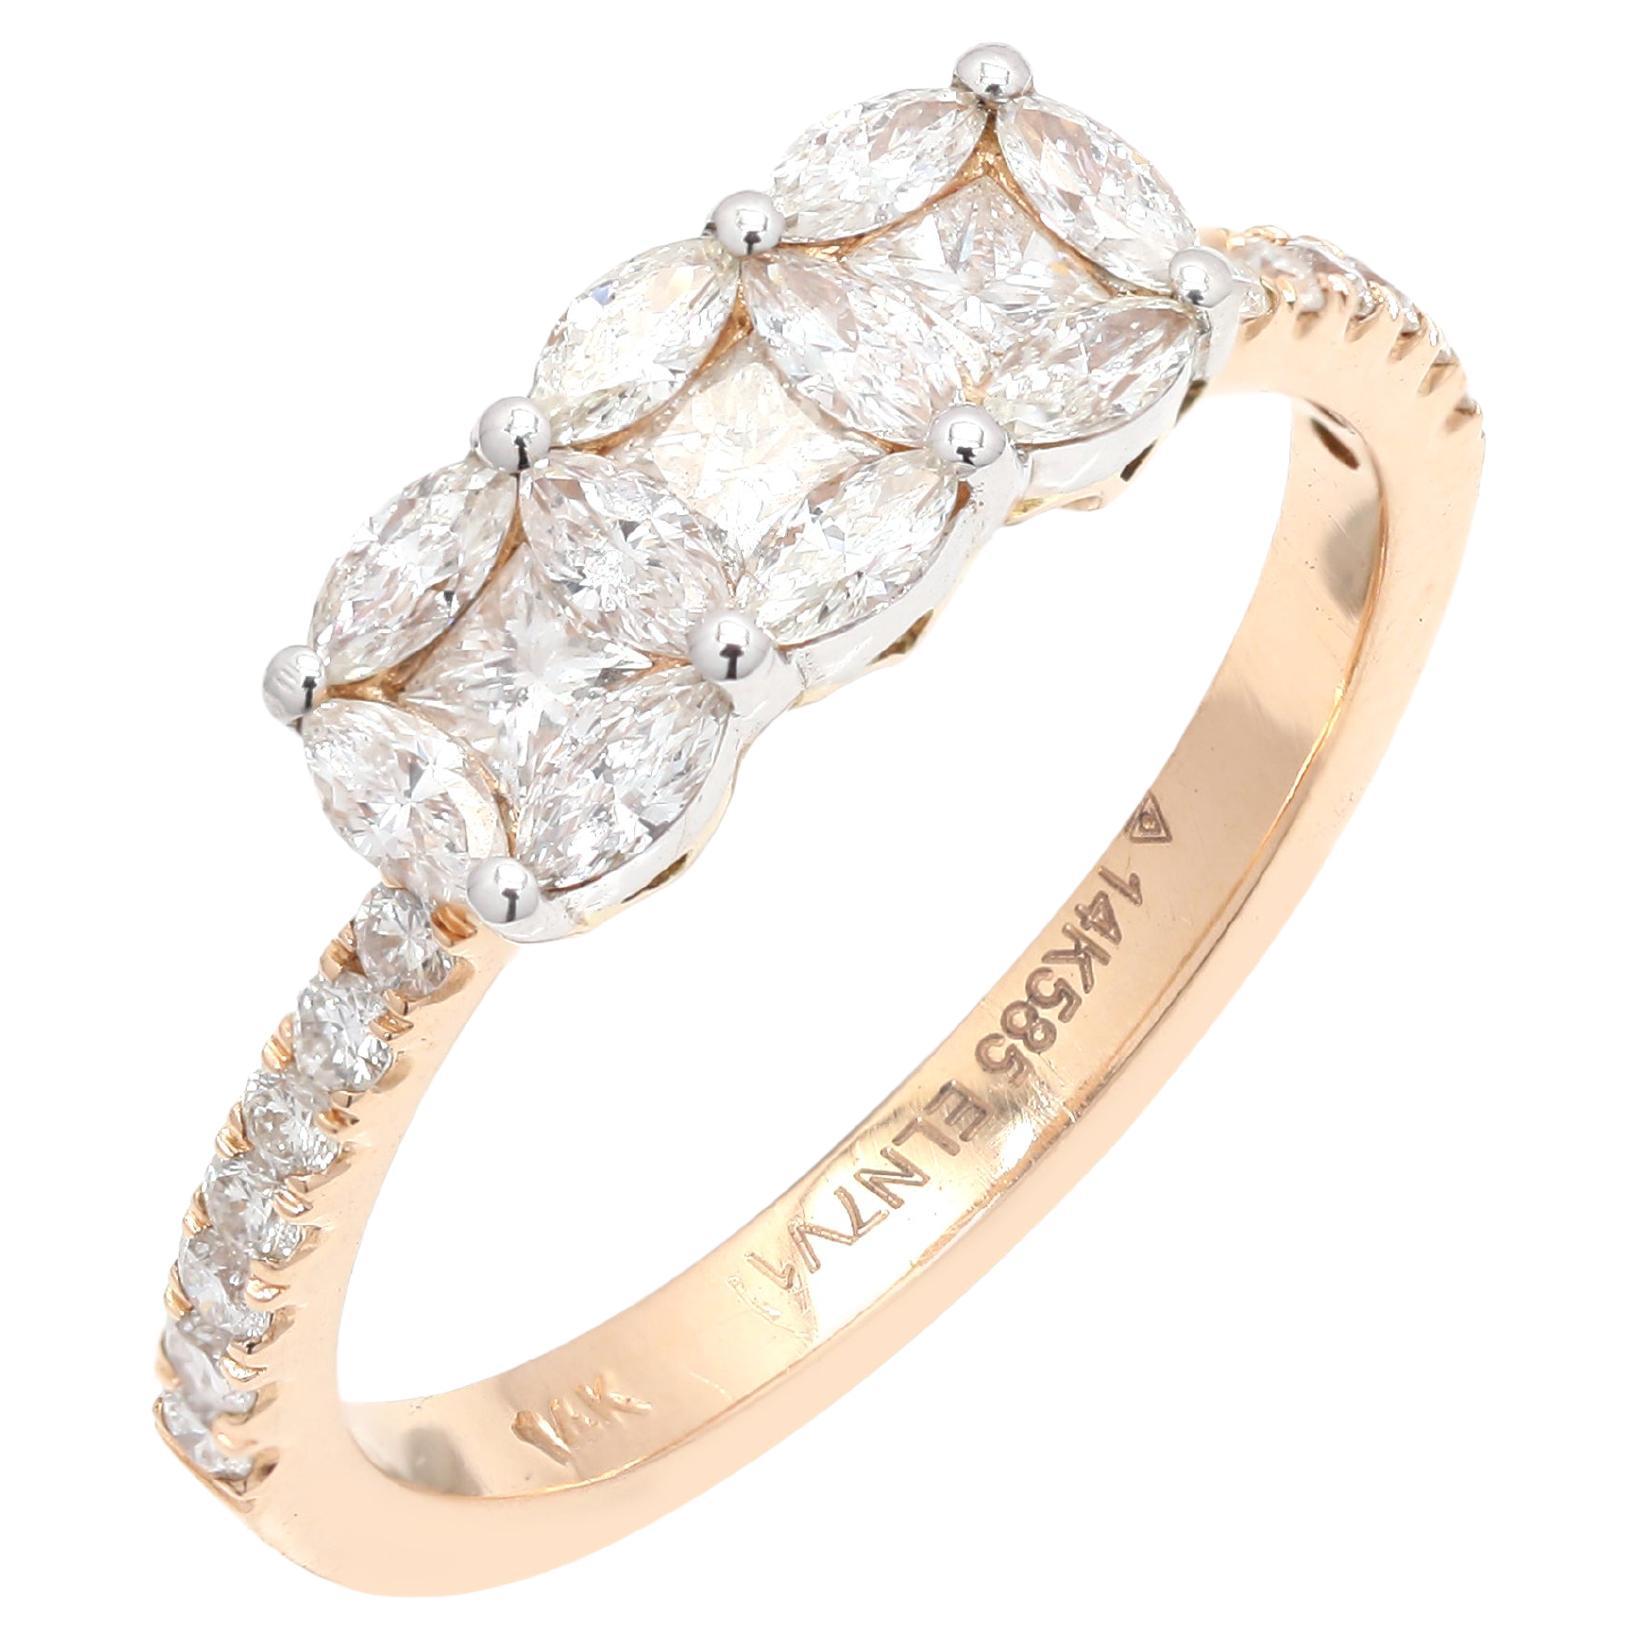 For Sale:  14k Yellow Gold Bespoke 0.78 Carat Brilliant Diamond Engagement Ring